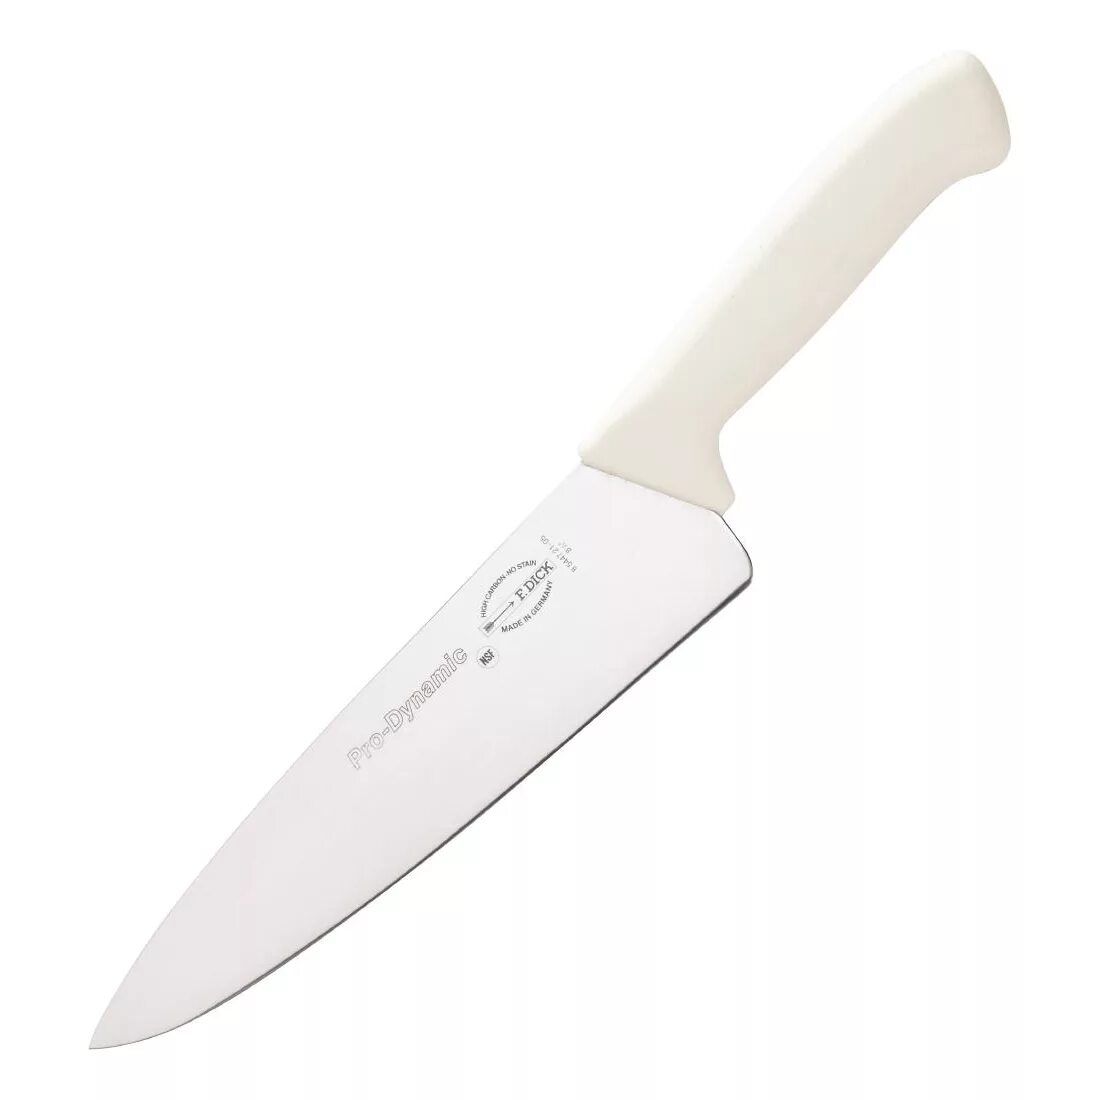 Ножи Paderno. Кухонный нож Paderno. Нож поварской Падерно 25. Складной поварской нож. Ножи dick